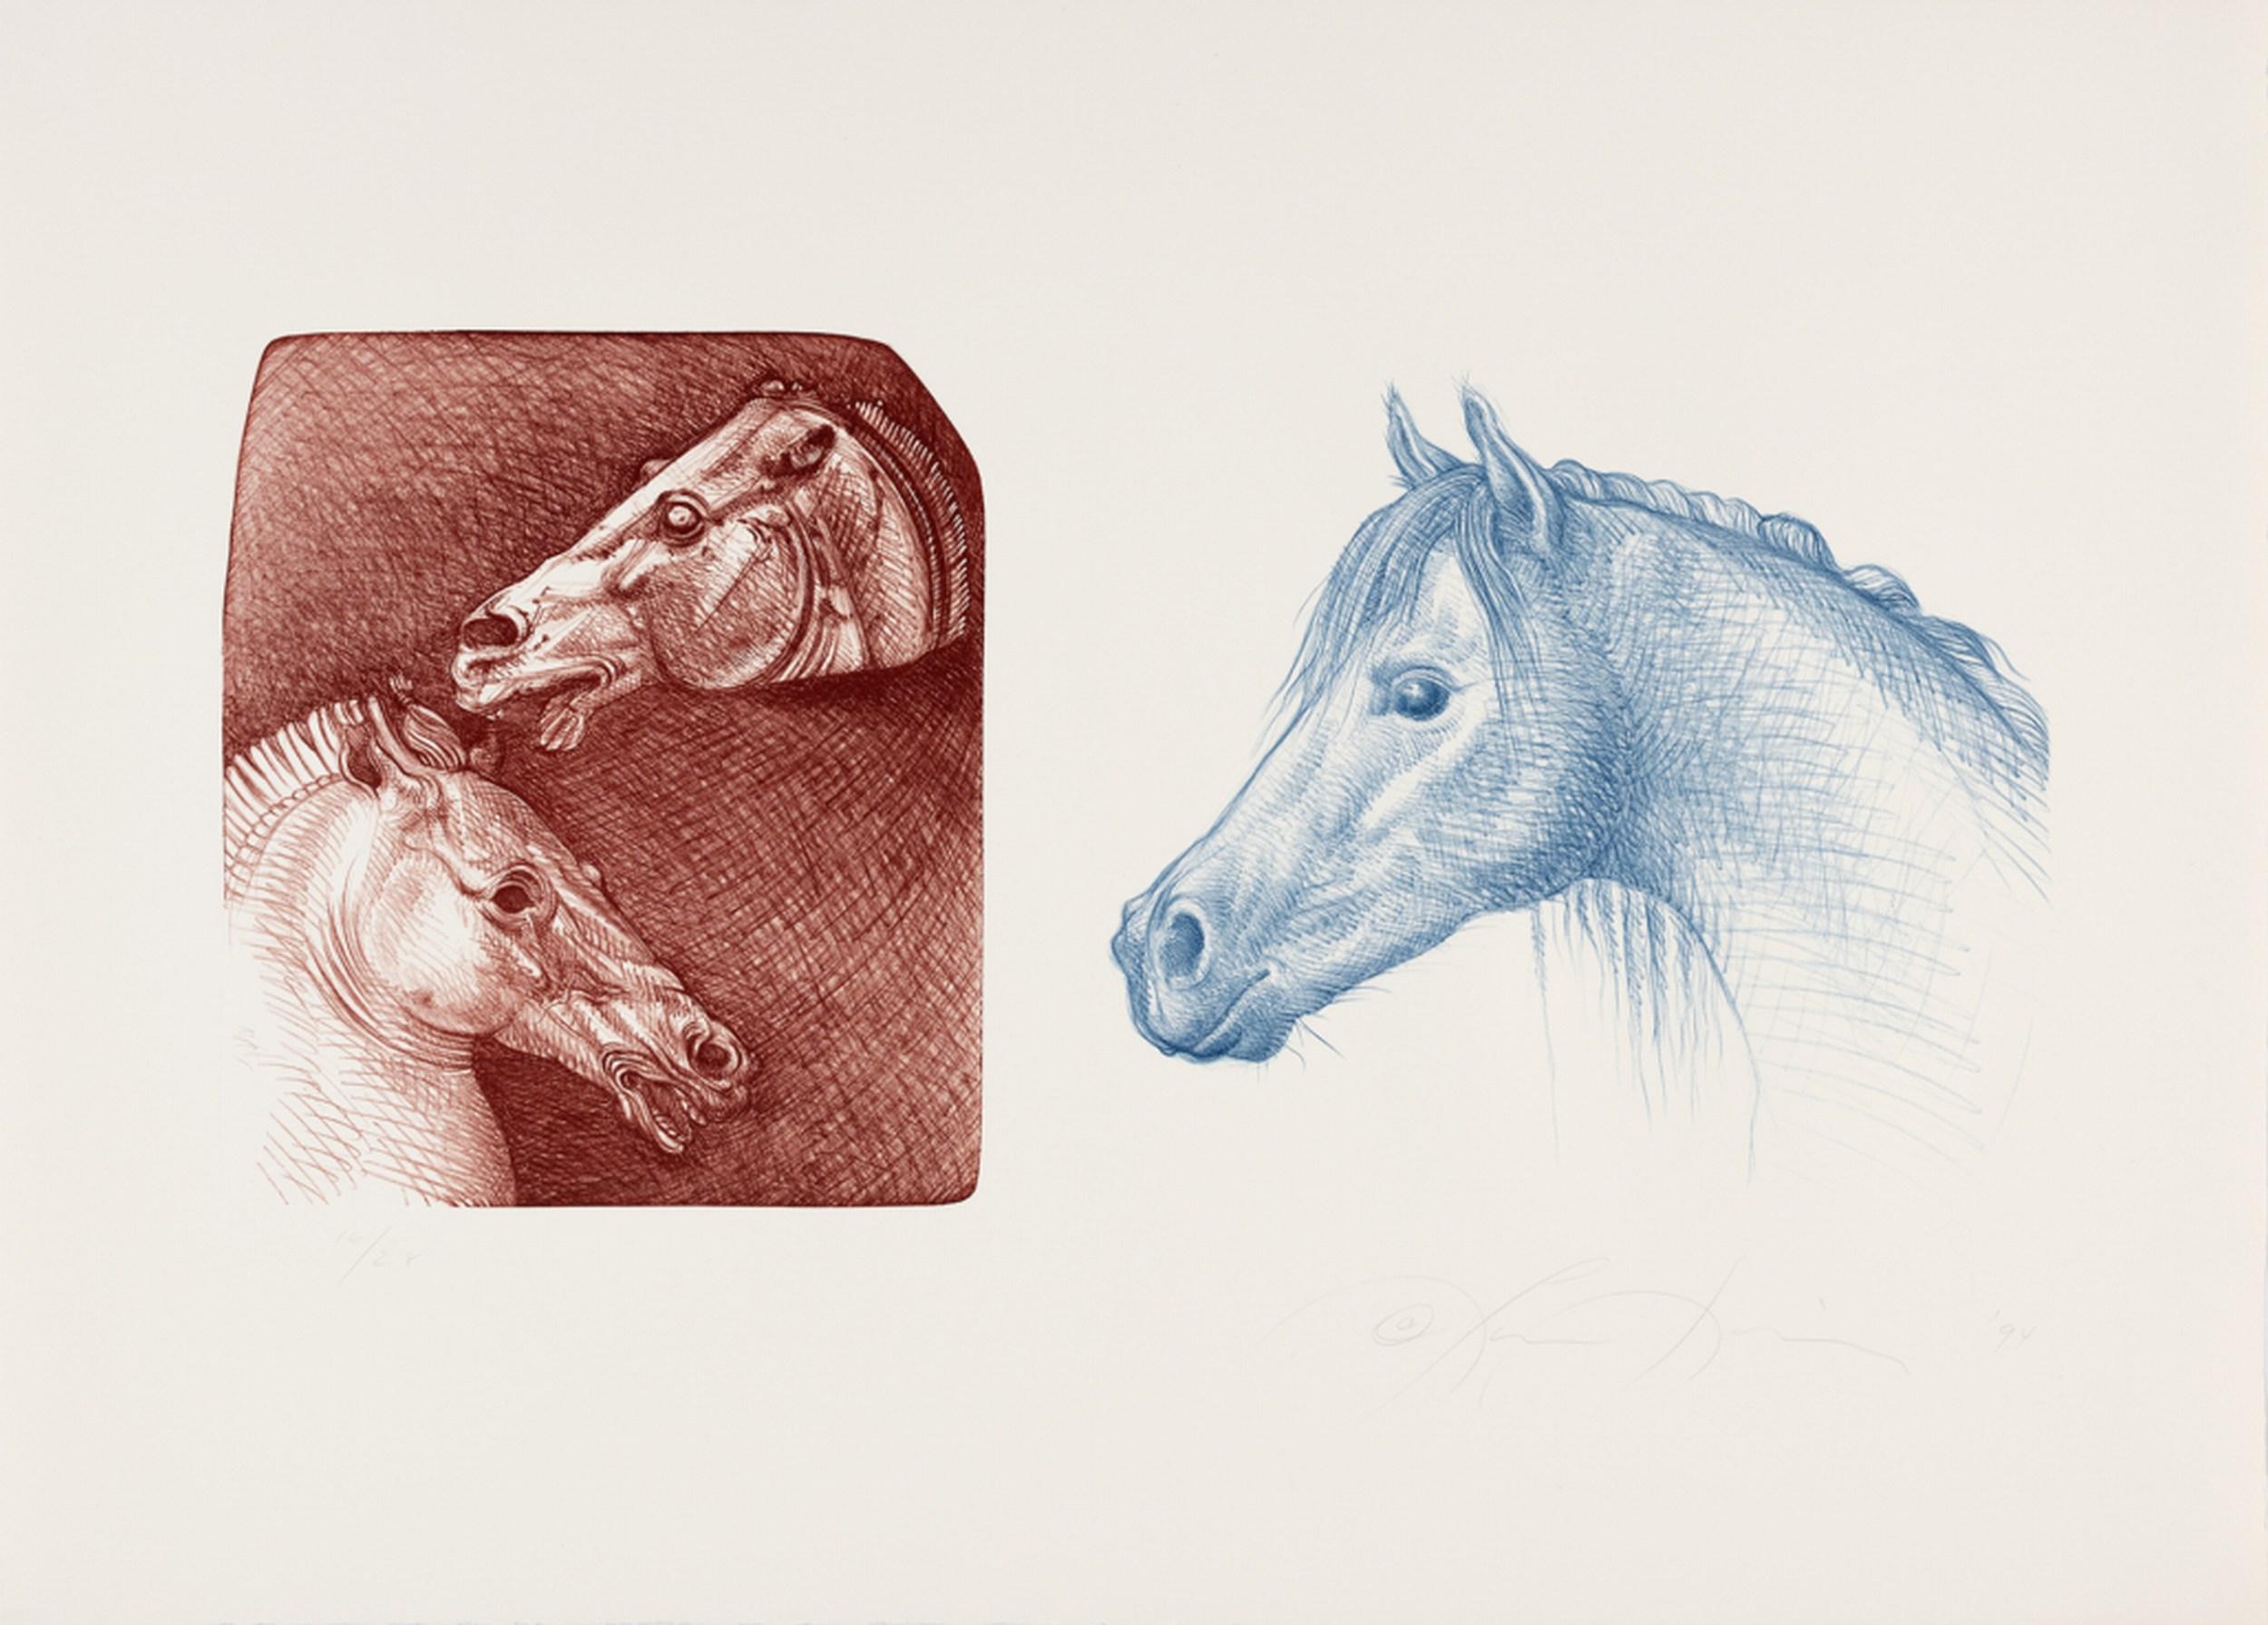 Luis Jiménez Animal Print - Study of Two Classical Greek Horse Heads and a Modern Horse